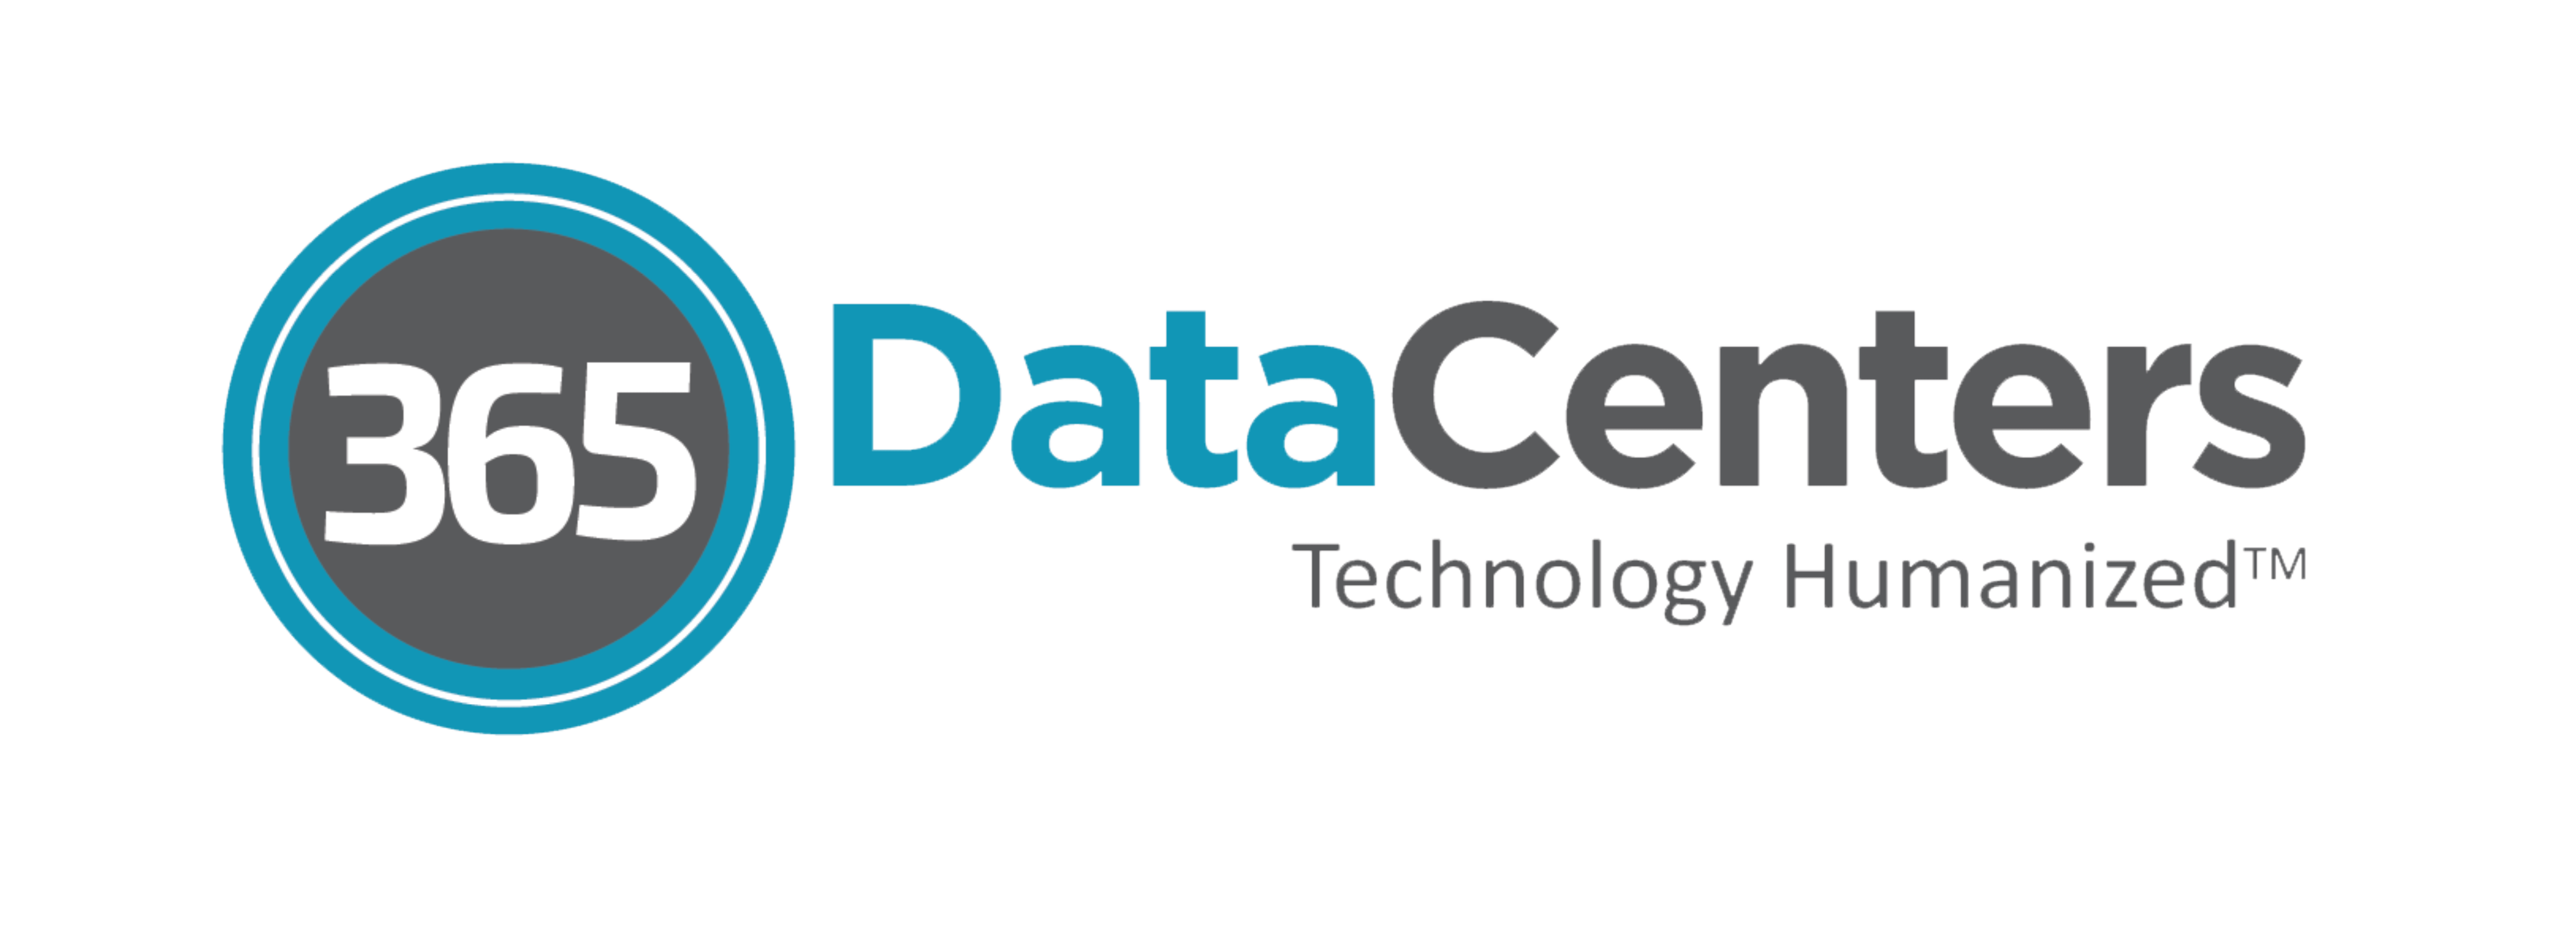 365 Data Centers Logo